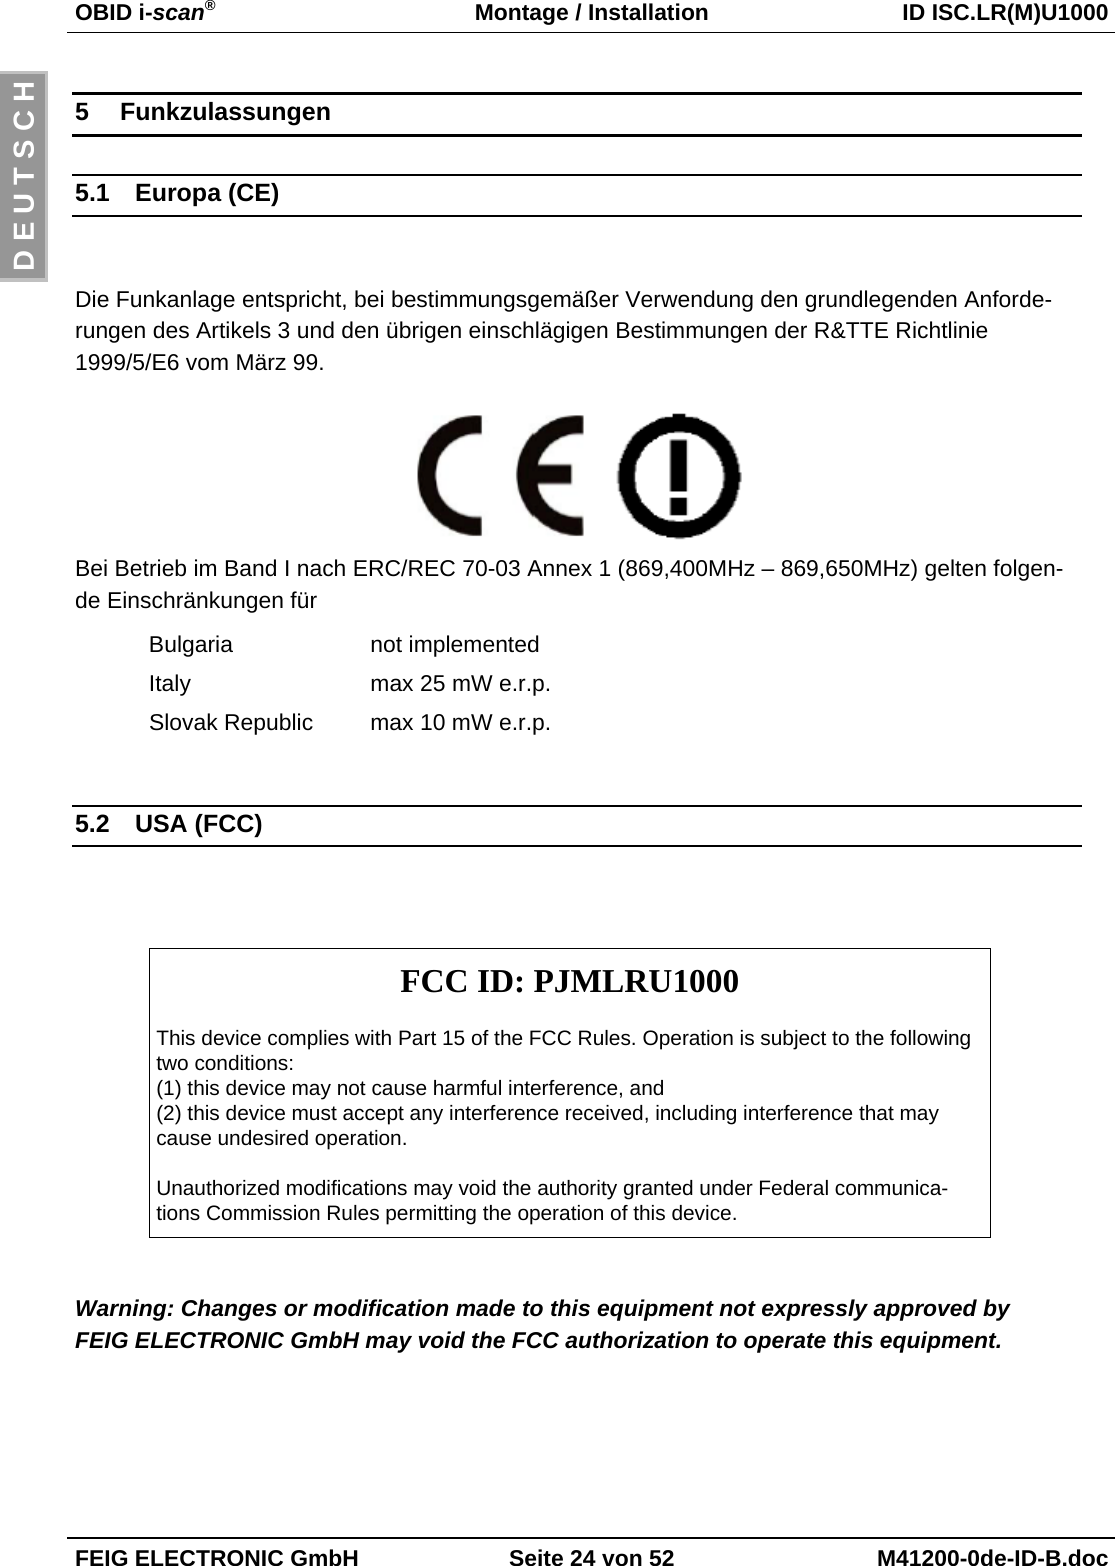 OBID i-scan®Montage / Installation ID ISC.LR(M)U1000FEIG ELECTRONIC GmbH Seite 24 von 52 M41200-0de-ID-B.docD E U T S C H5 Funkzulassungen5.1 Europa (CE)Die Funkanlage entspricht, bei bestimmungsgemäßer Verwendung den grundlegenden Anforde-rungen des Artikels 3 und den übrigen einschlägigen Bestimmungen der R&amp;TTE Richtlinie1999/5/E6 vom März 99.Bei Betrieb im Band I nach ERC/REC 70-03 Annex 1 (869,400MHz – 869,650MHz) gelten folgen-de Einschränkungen fürBulgaria not implementedItaly max 25 mW e.r.p.  Slovak Republic max 10 mW e.r.p.5.2 USA (FCC)FCC ID: PJMLRU1000This device complies with Part 15 of the FCC Rules. Operation is subject to the followingtwo conditions:(1) this device may not cause harmful interference, and(2) this device must accept any interference received, including interference that maycause undesired operation.Unauthorized modifications may void the authority granted under Federal communica-tions Commission Rules permitting the operation of this device.Warning: Changes or modification made to this equipment not expressly approved byFEIG ELECTRONIC GmbH may void the FCC authorization to operate this equipment.